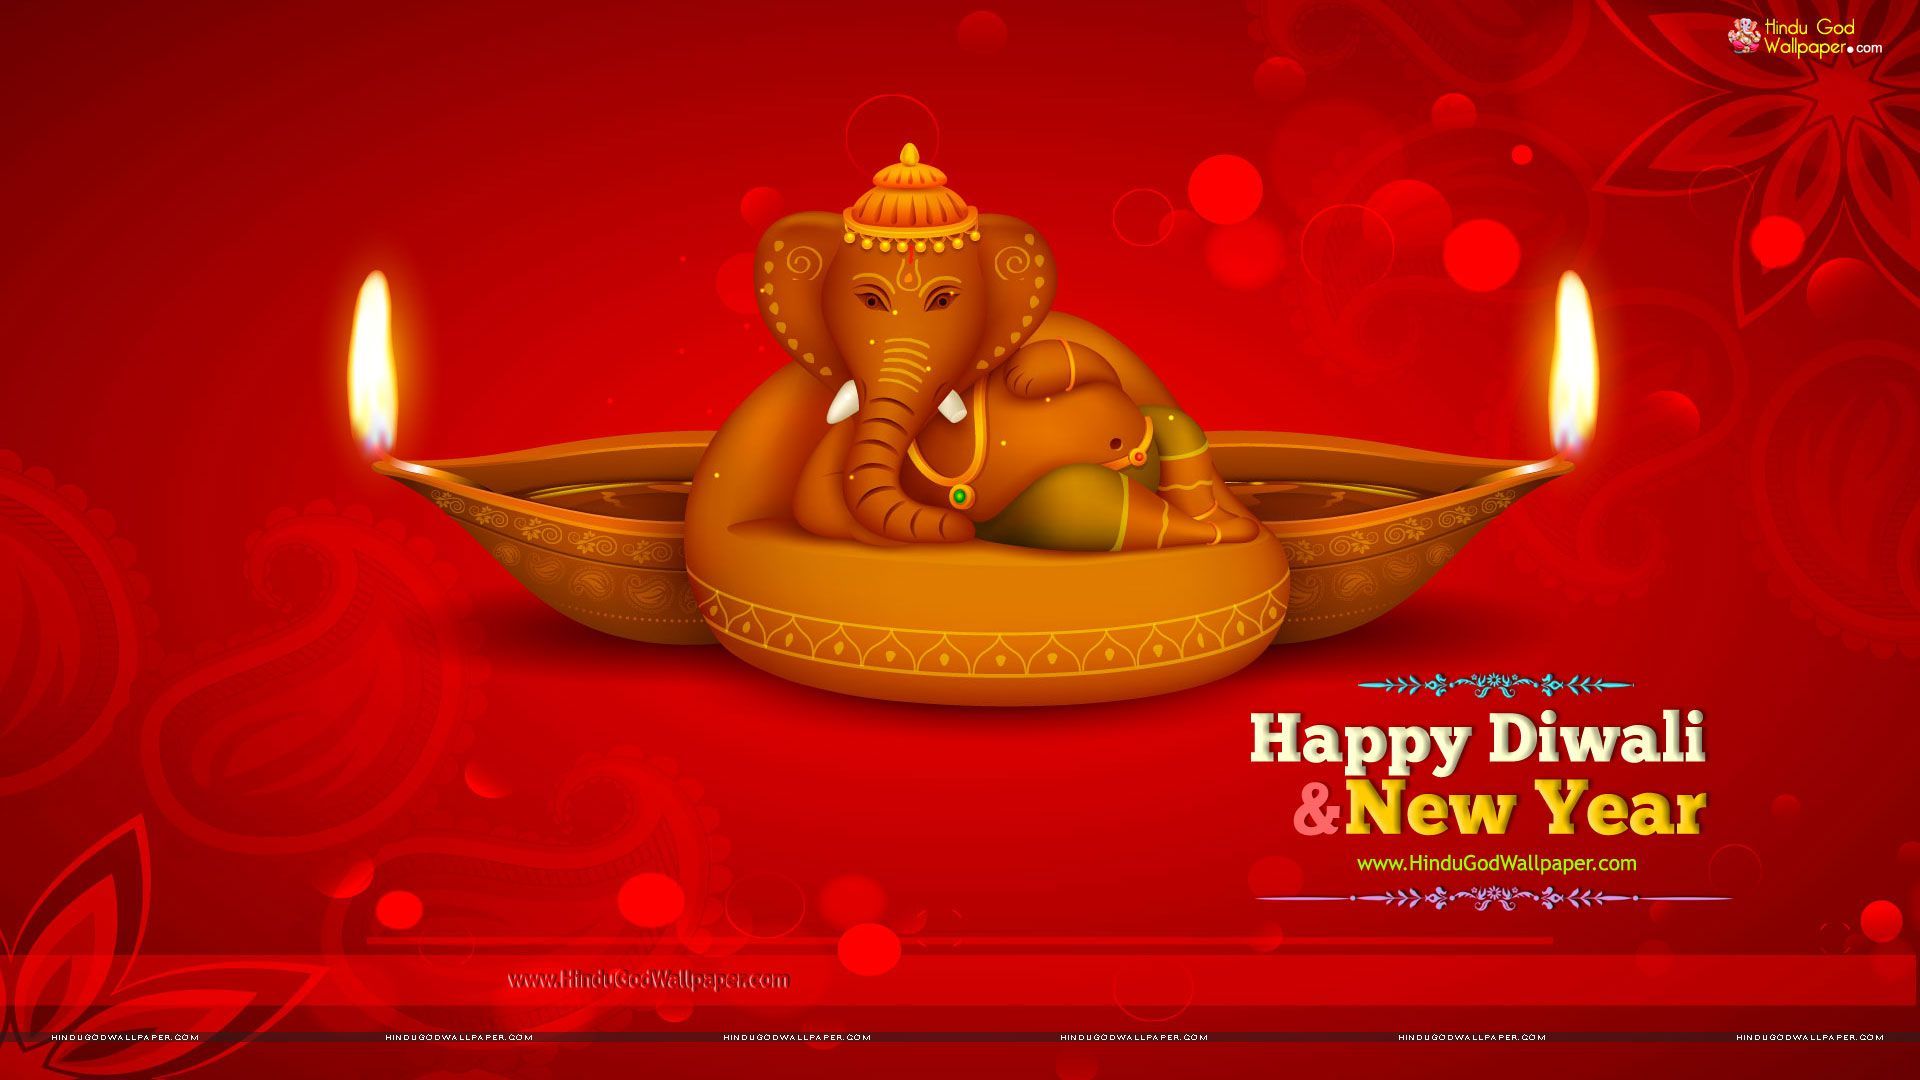 Diwali New Year Wallpaper HD Free Download. Happy diwali, New year wallpaper, New year wallpaper hd